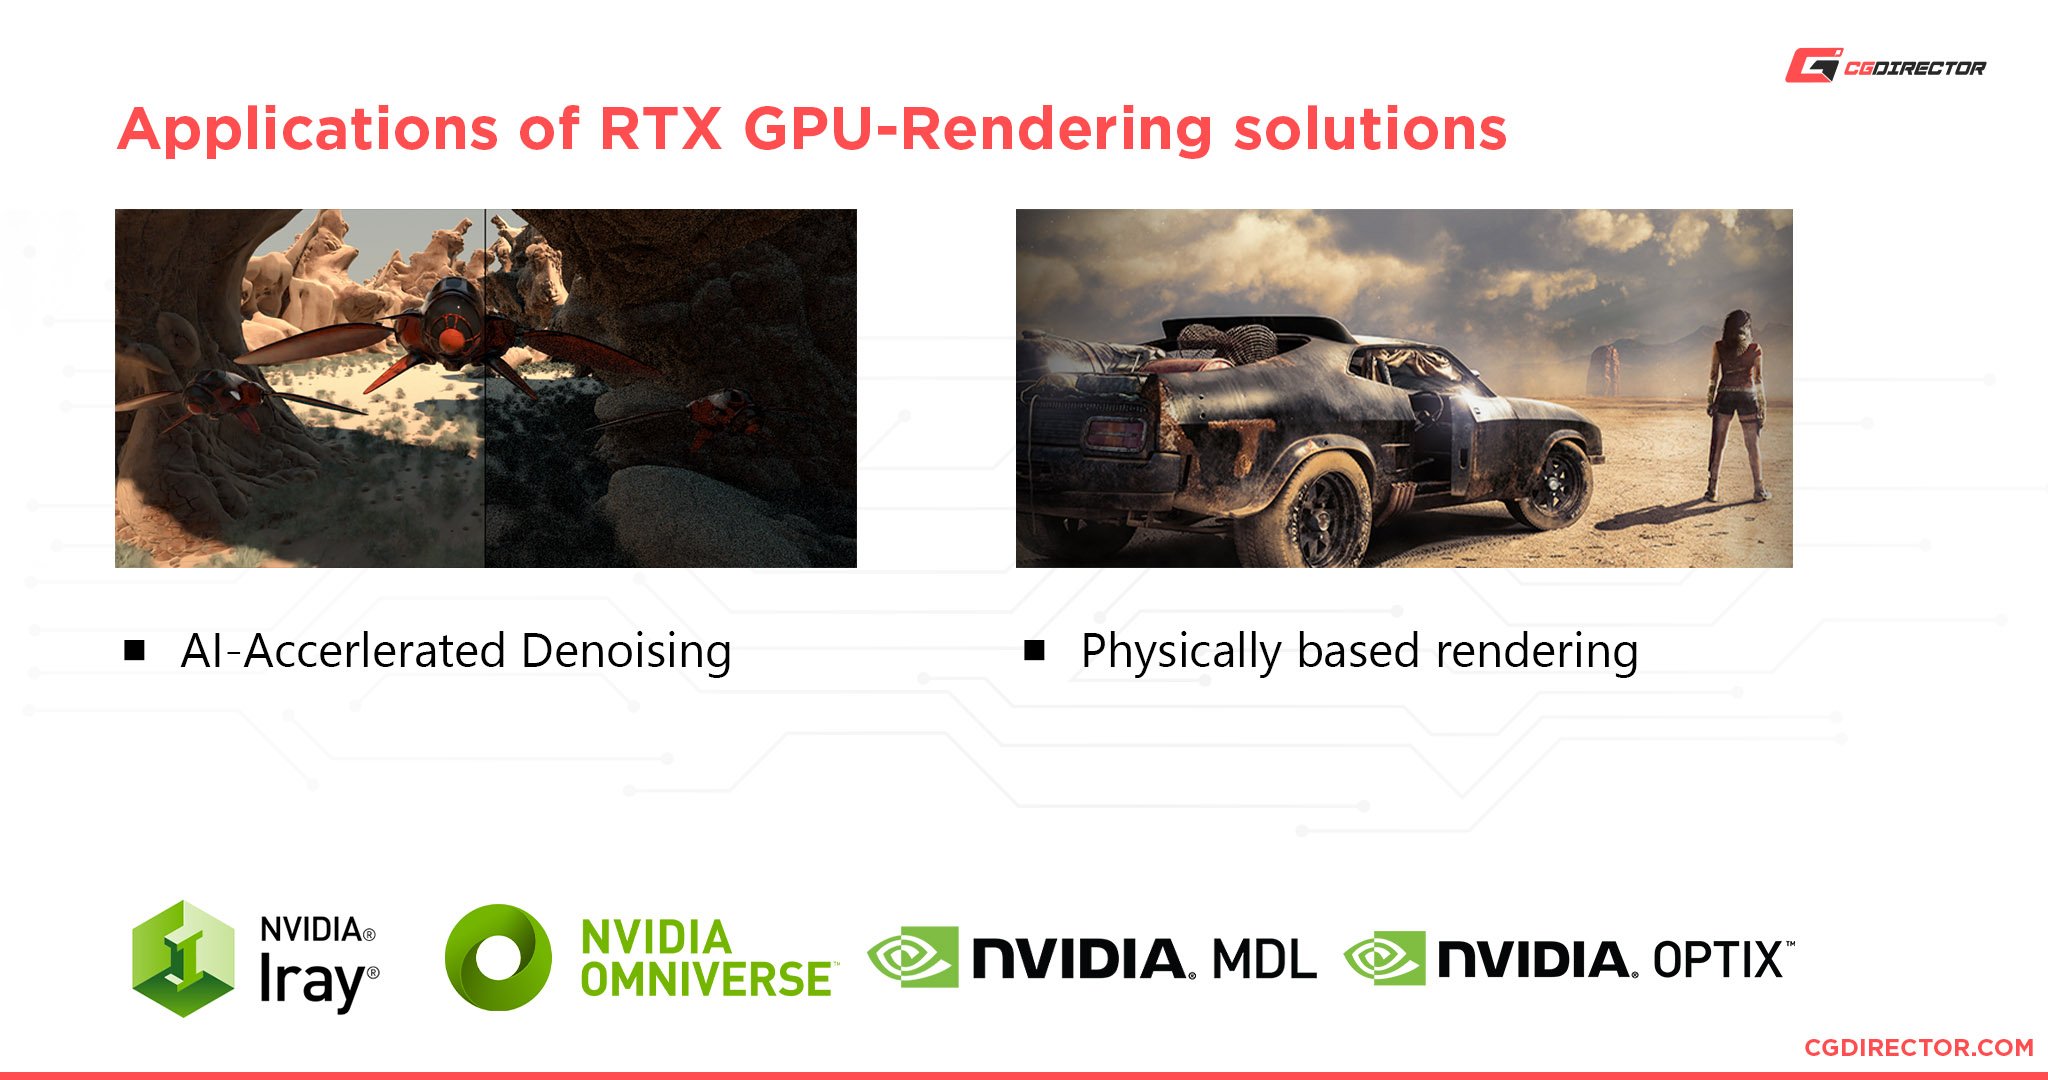 Nvidia RTX GPU-Rendering Solutions